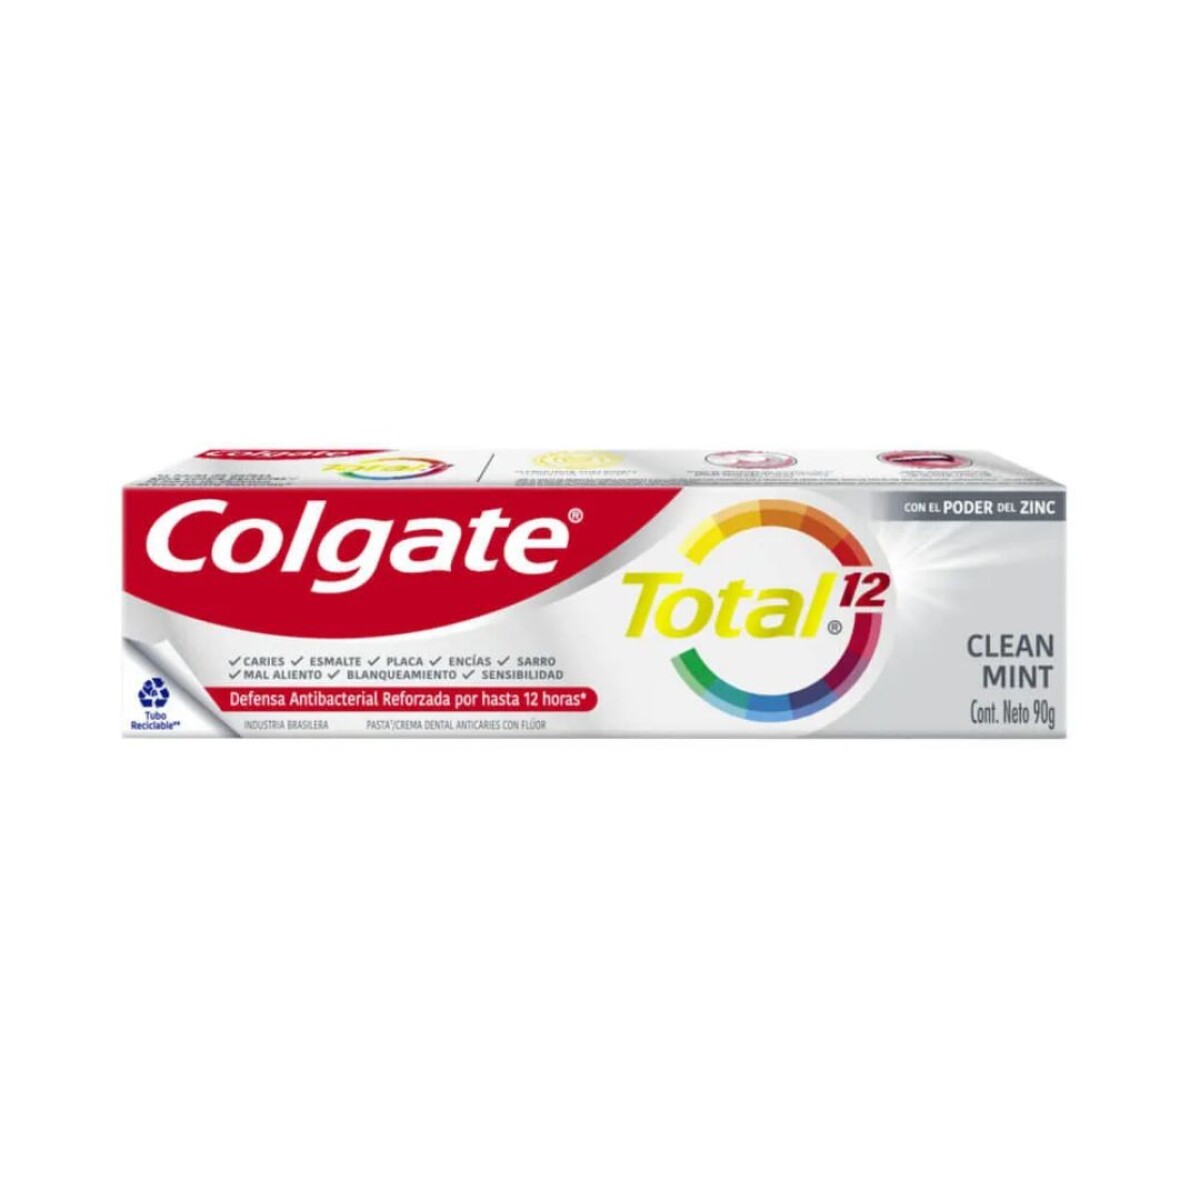 Colgate Crema Dental 90g - Clean Mint 